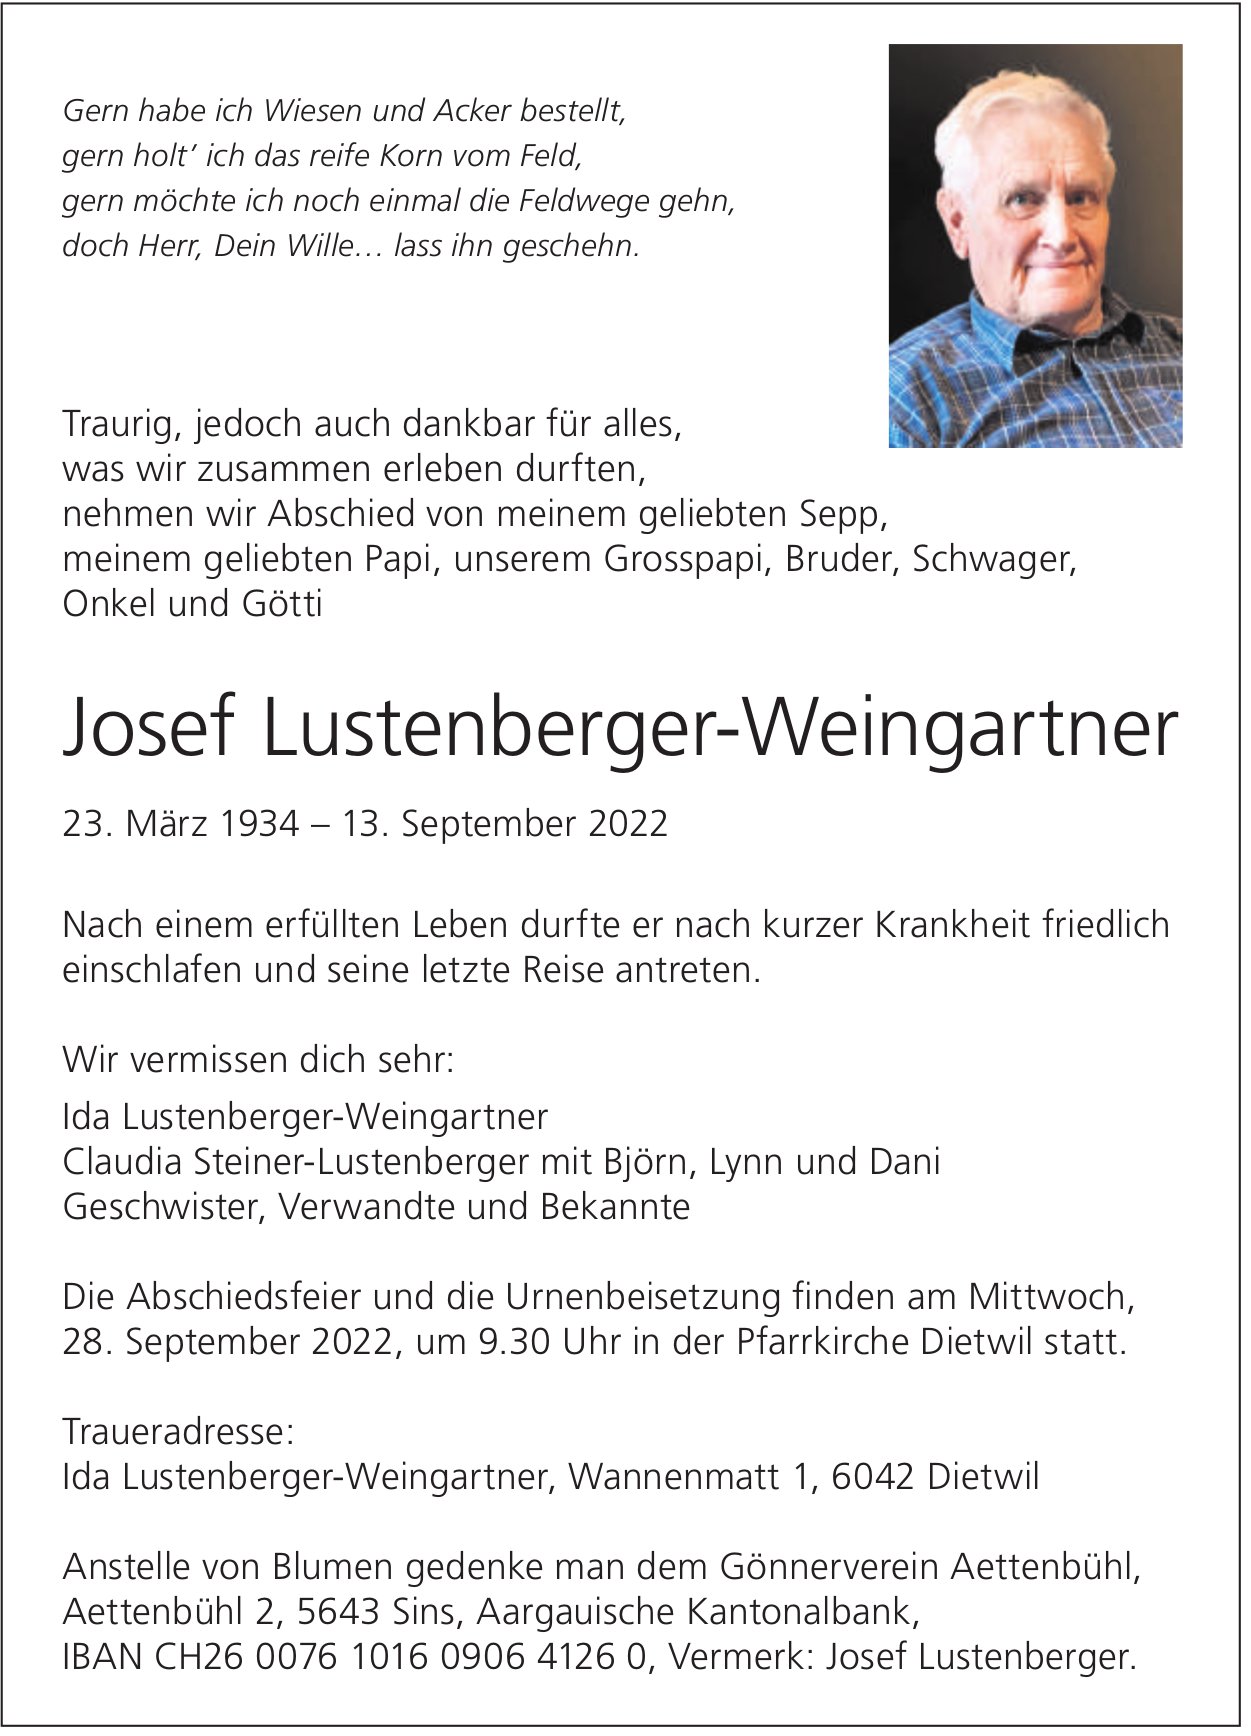 Lustenberger-Weingartner Josef, September 2022 / TA